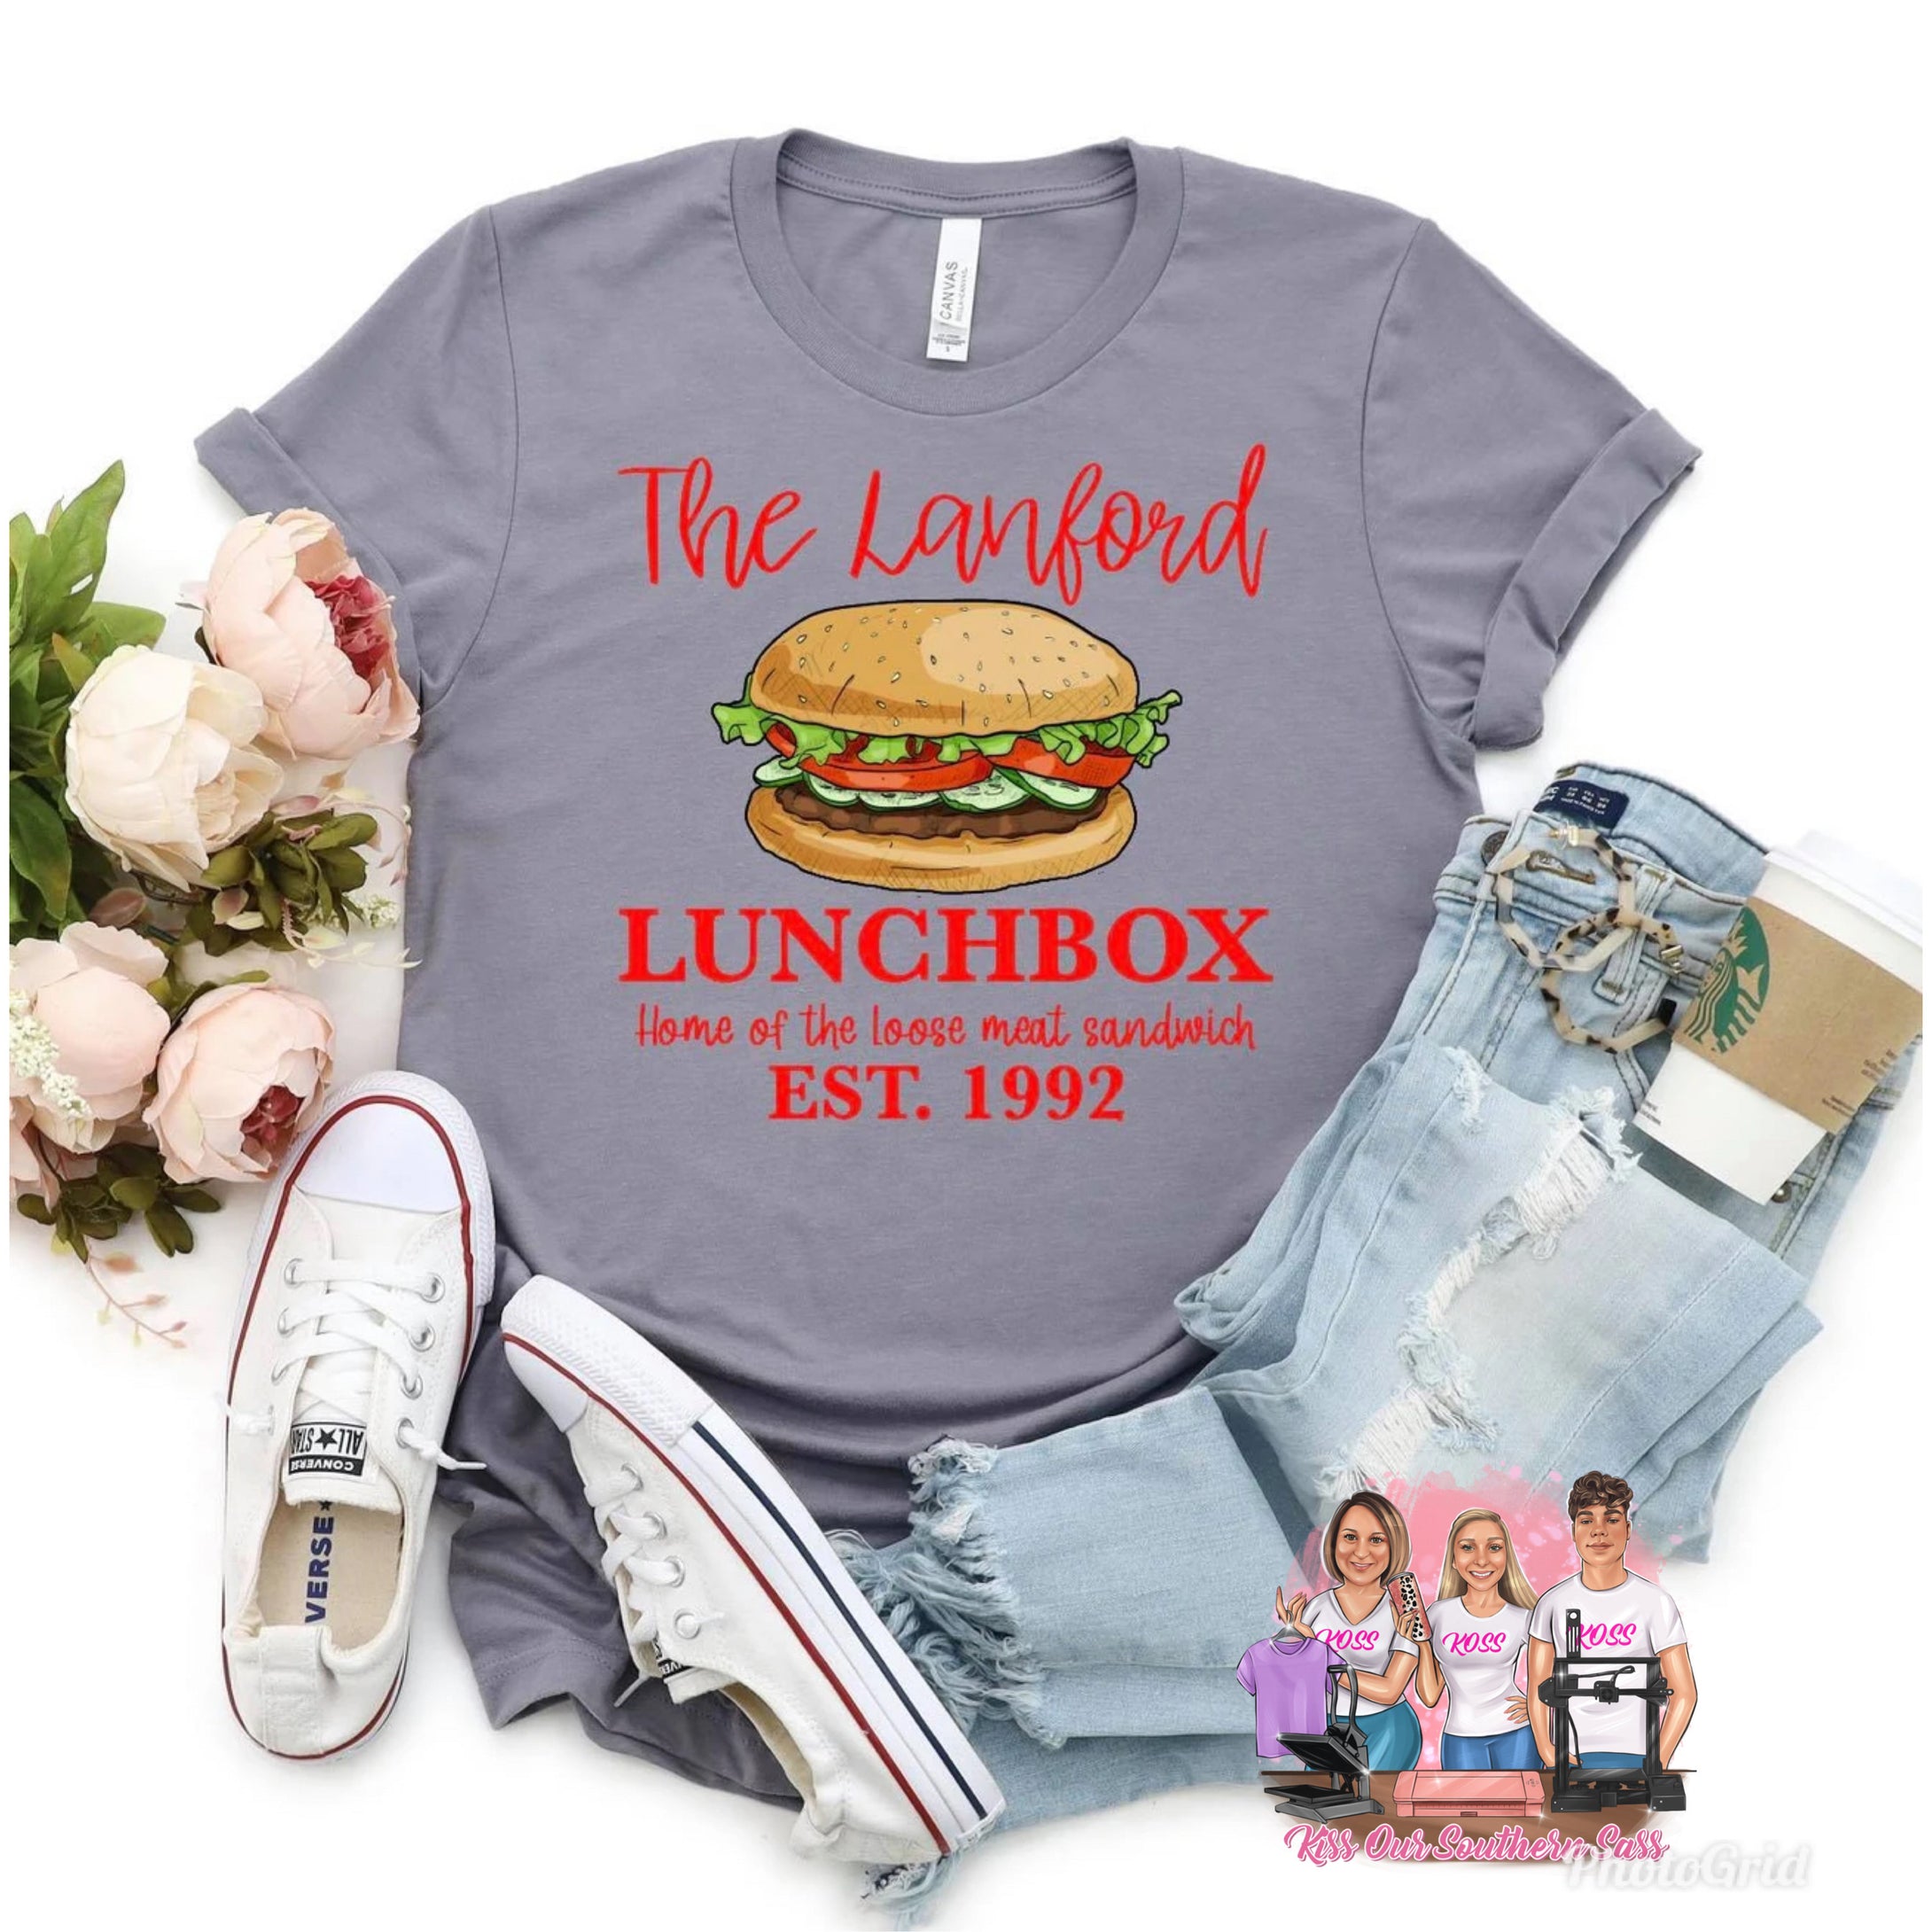 The Landford Lunchbox